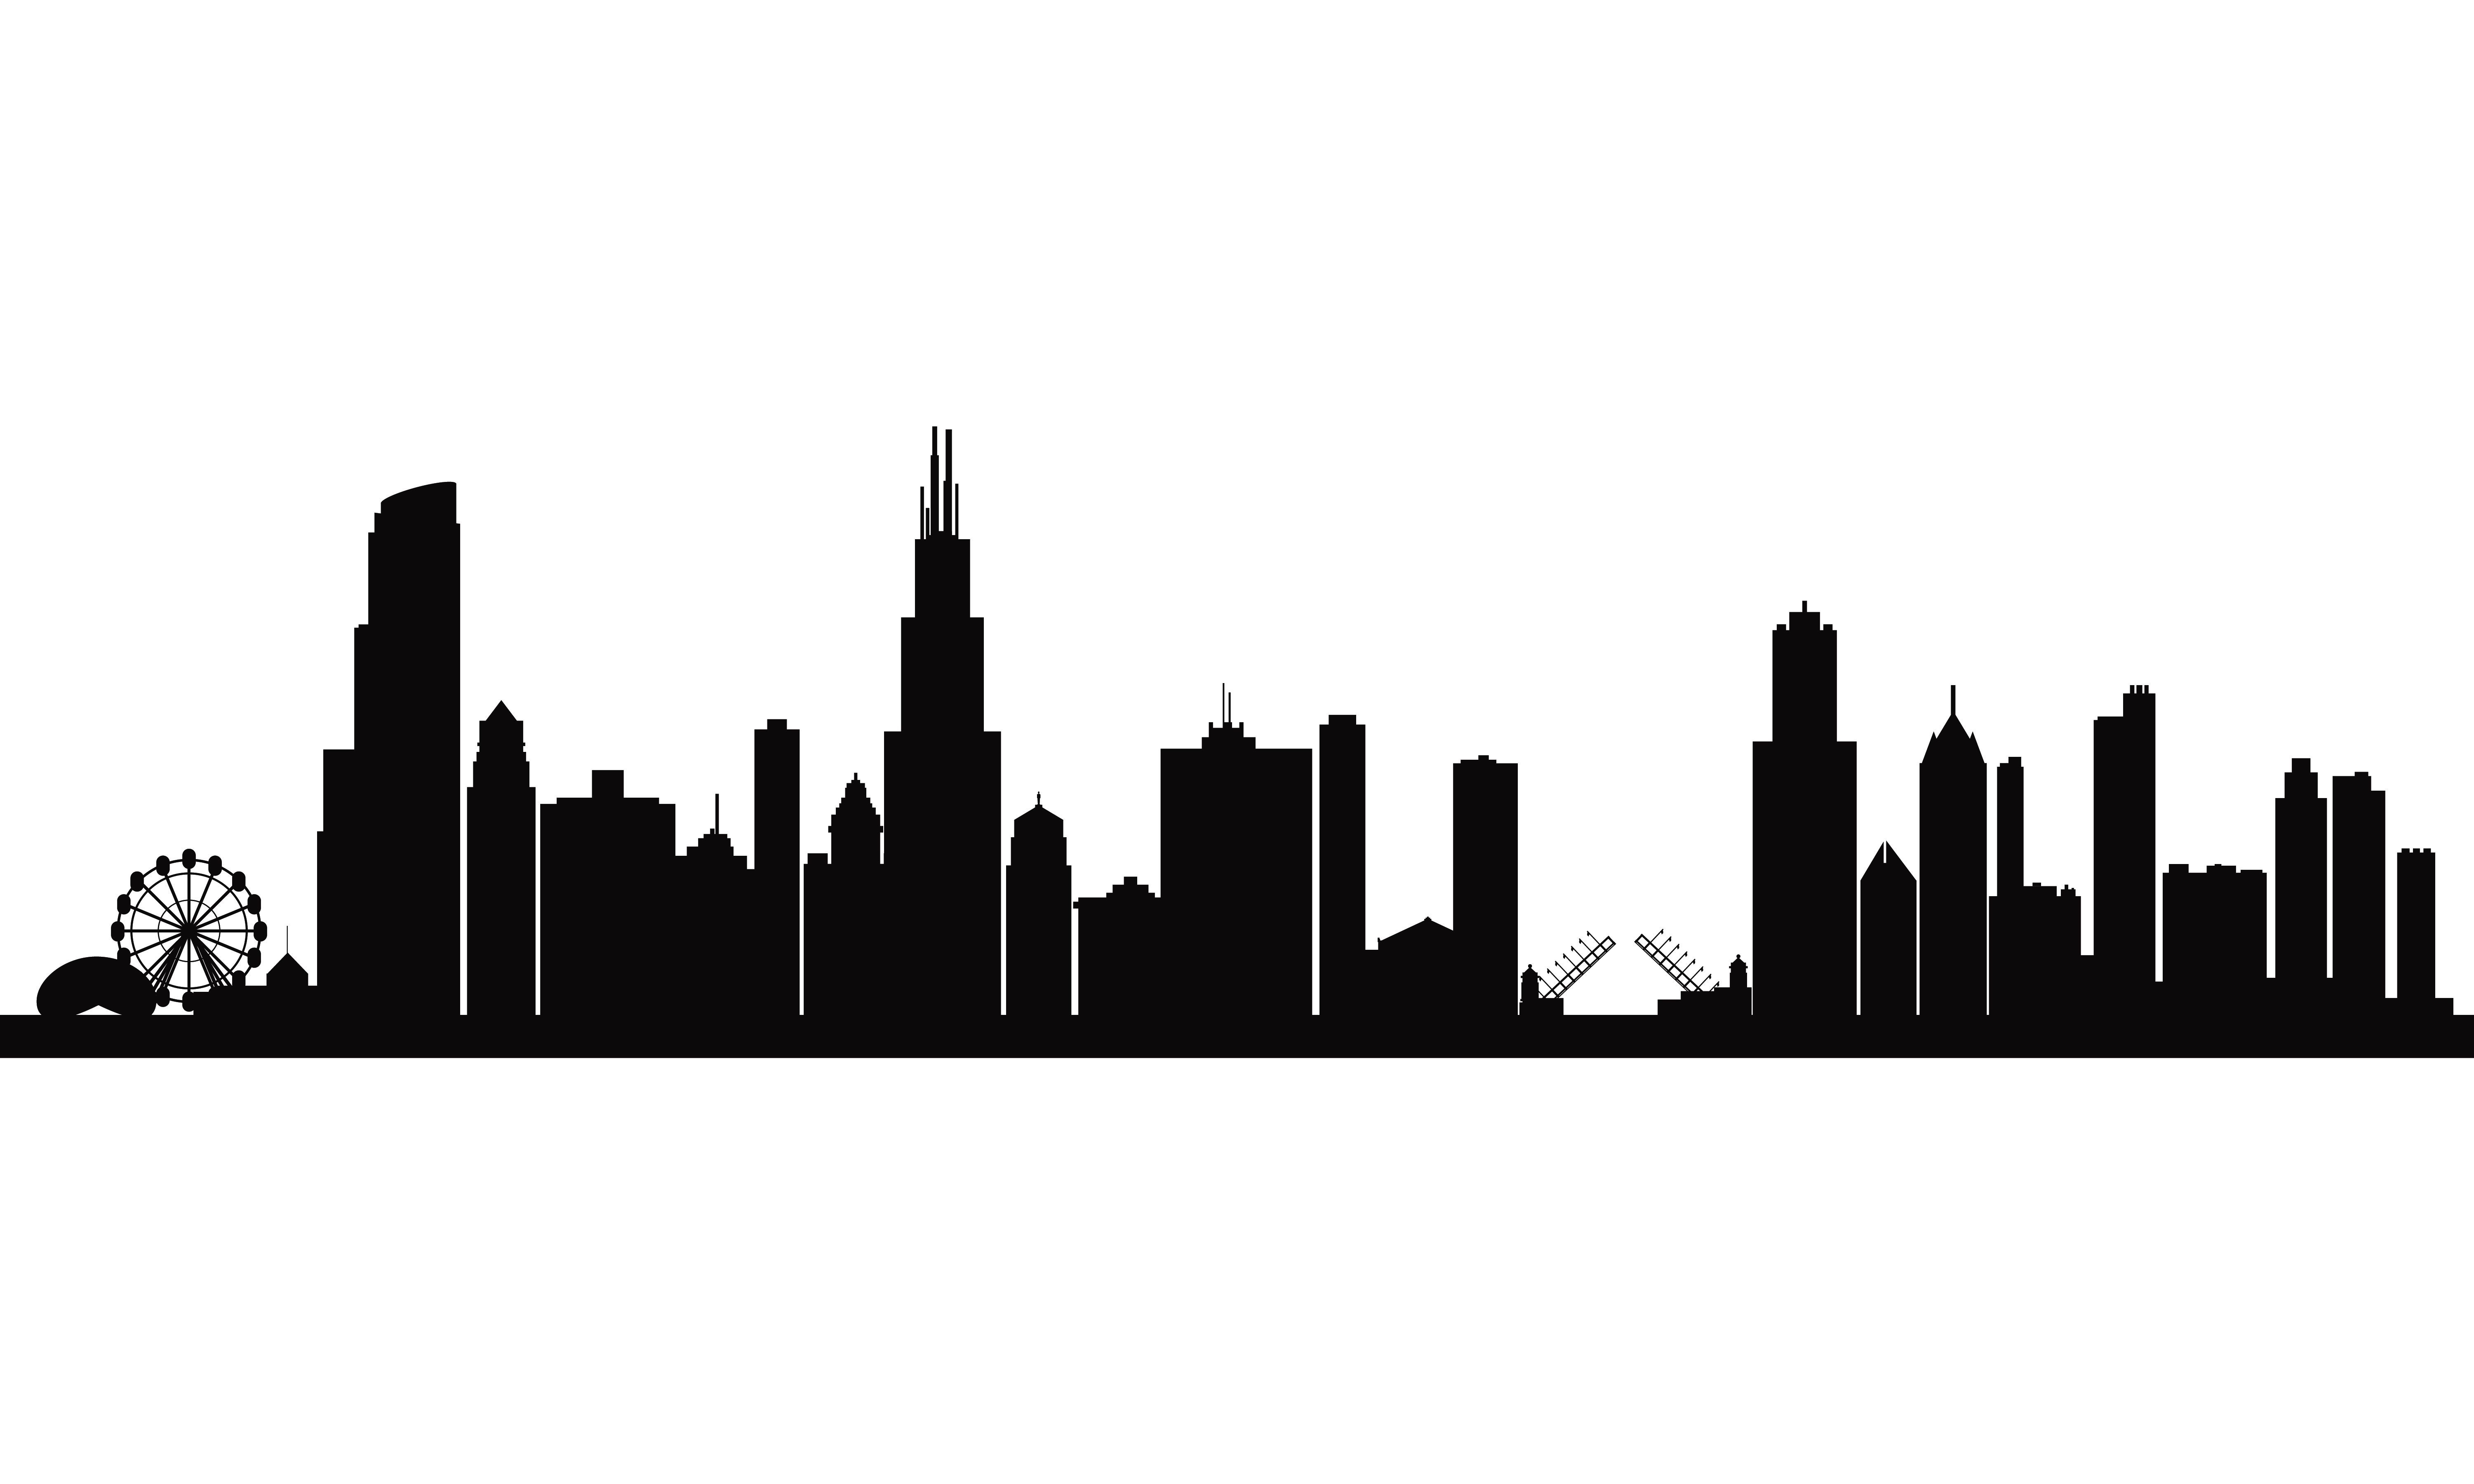 City skyline silhouette background - 312 Pizza Company